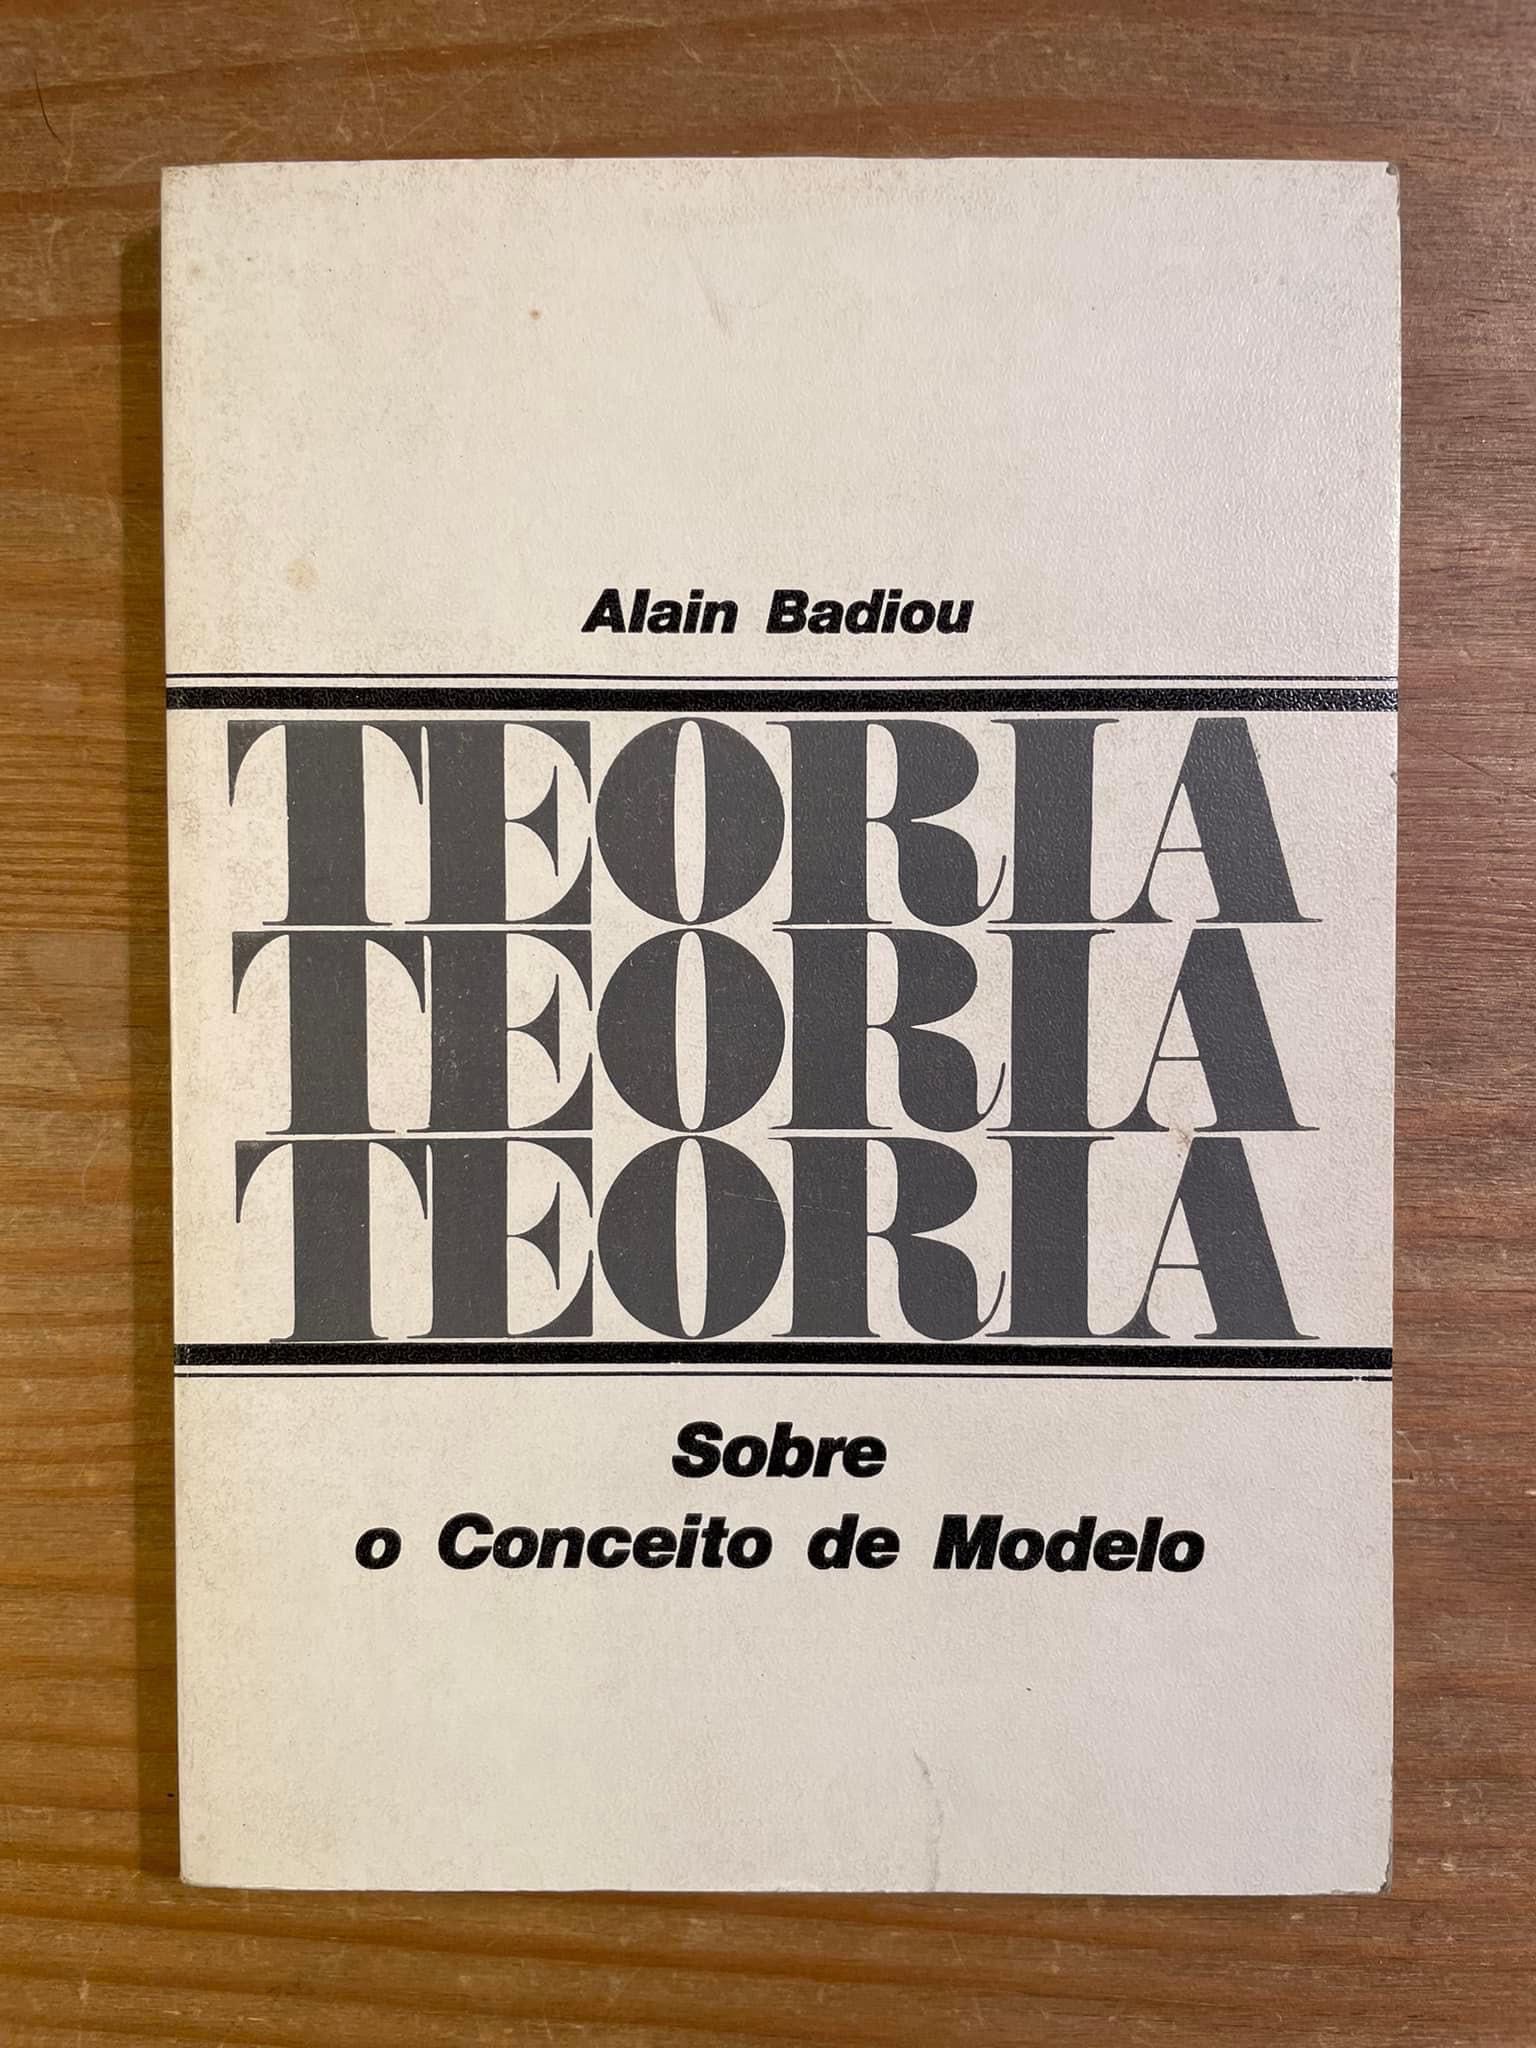 Teoria Sobre o Conceito de Modelo - Alain Badiou (portes grátis)